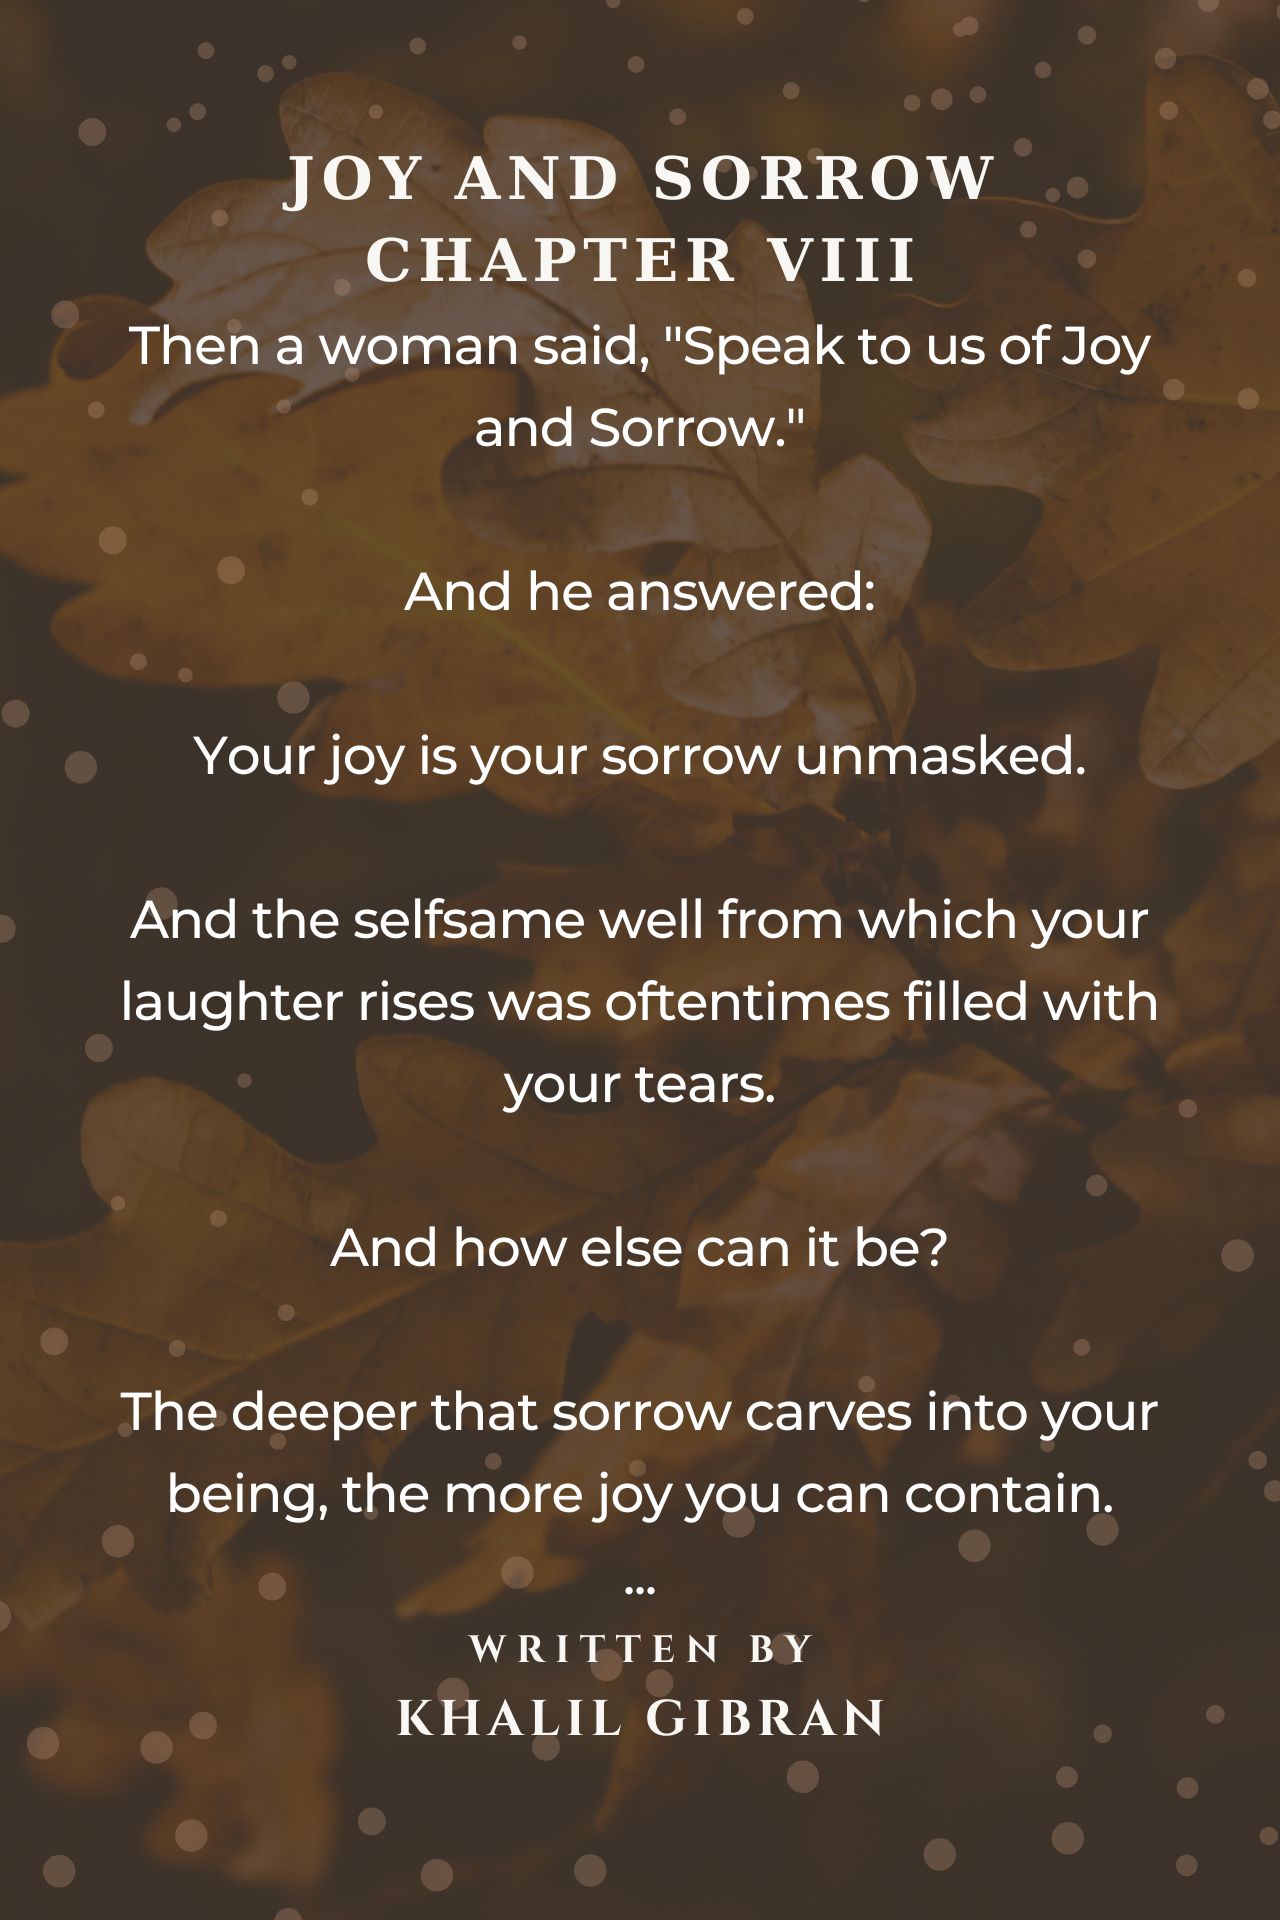 essay on joy and sorrow go hand in hand